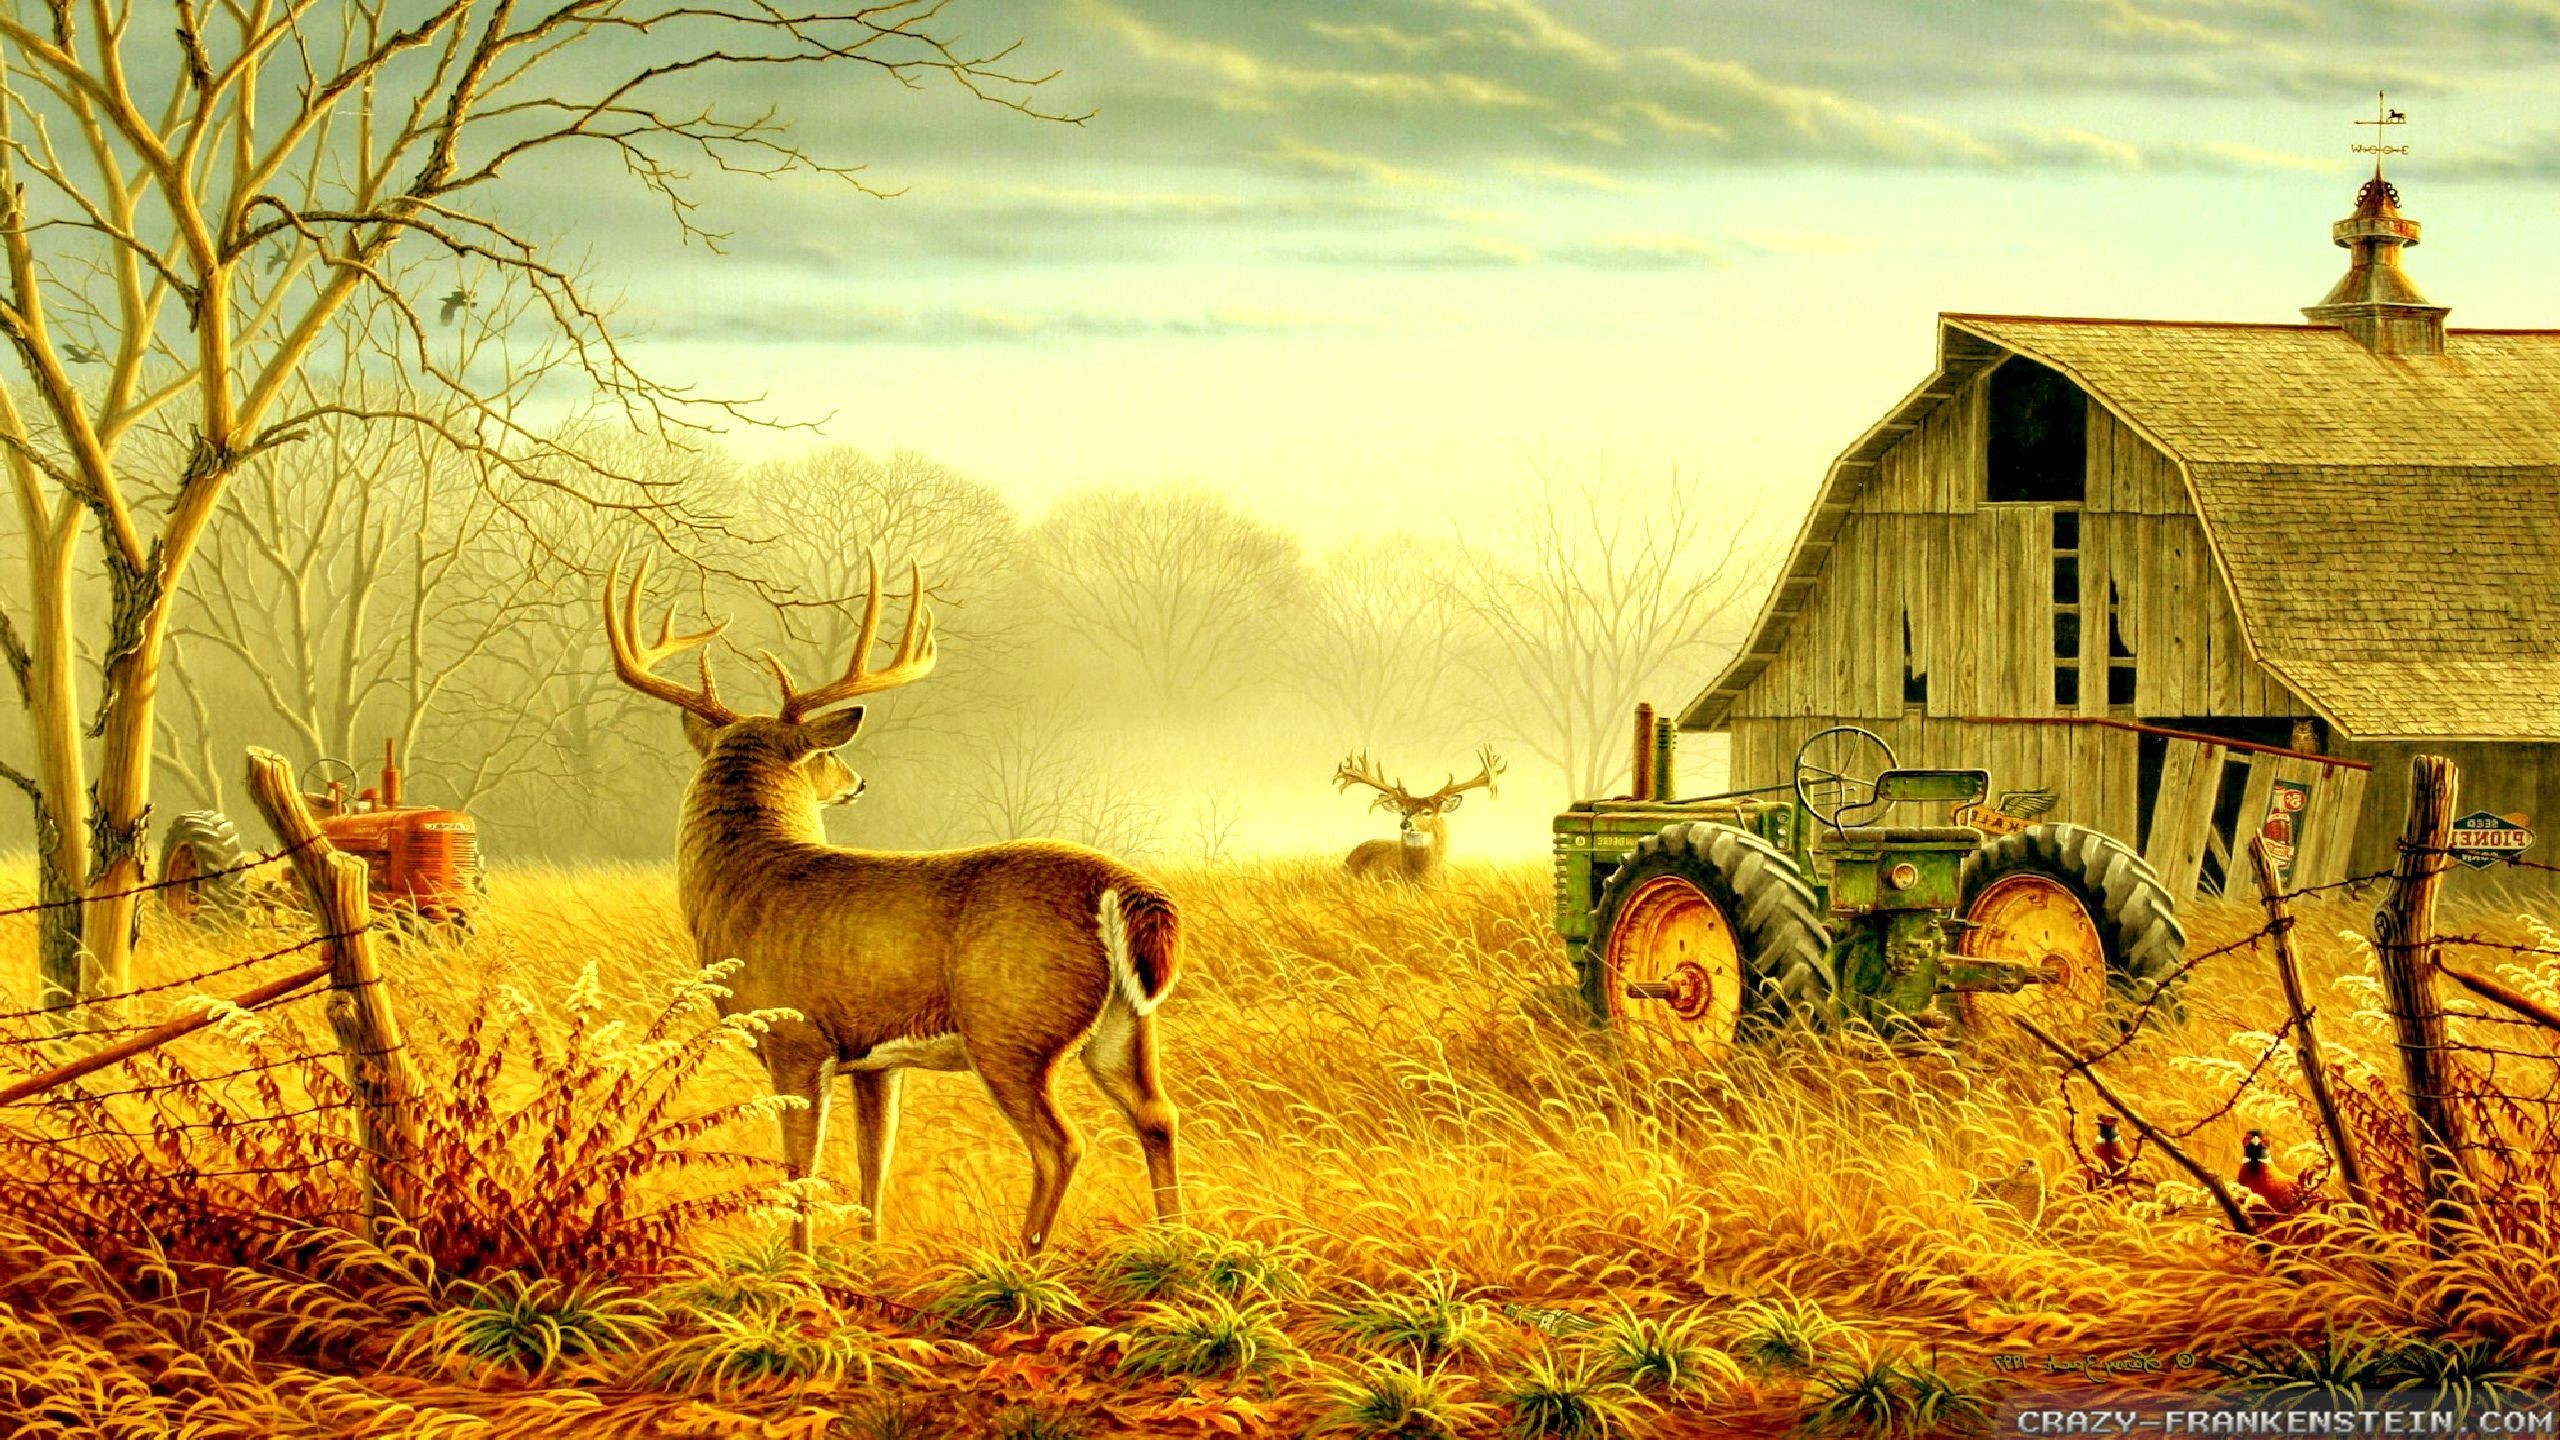 2560x1440 1600x1200 farm in winter | Winter Farm Desktop Wallpaper - WallpaperSafari">